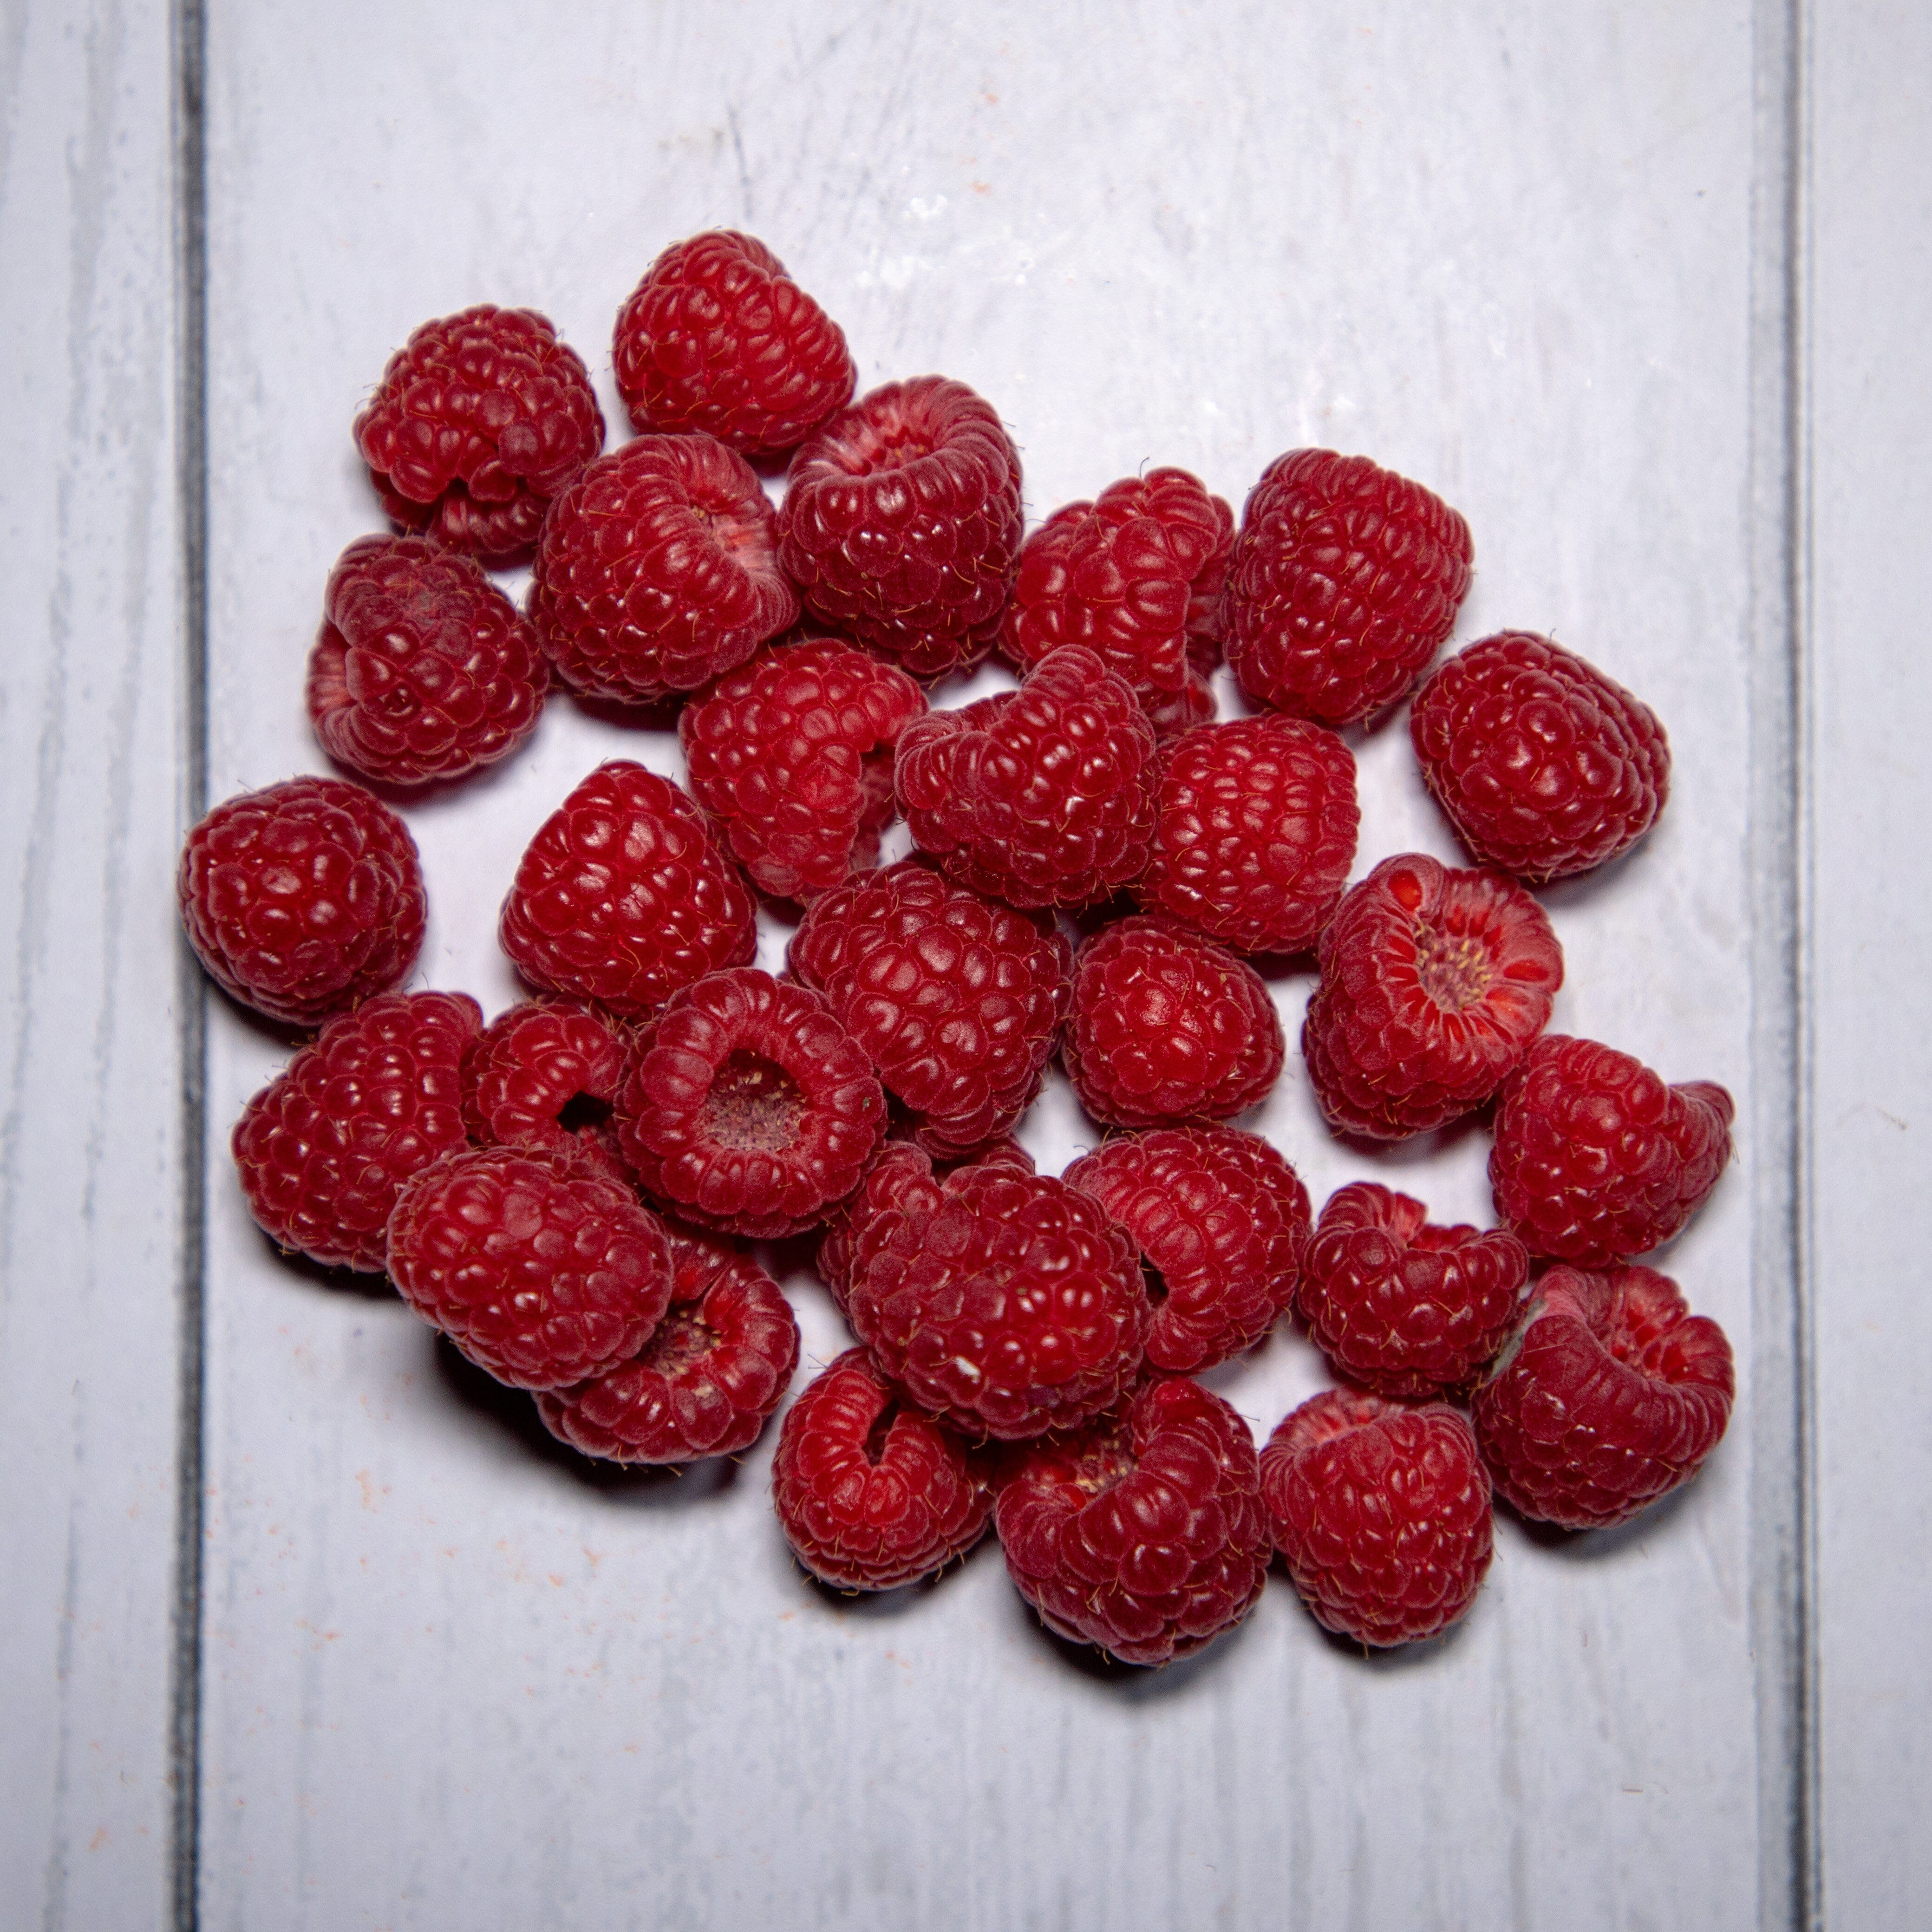 Raspberry Imported - 125 Gms - Kedia Organic Agro Farms